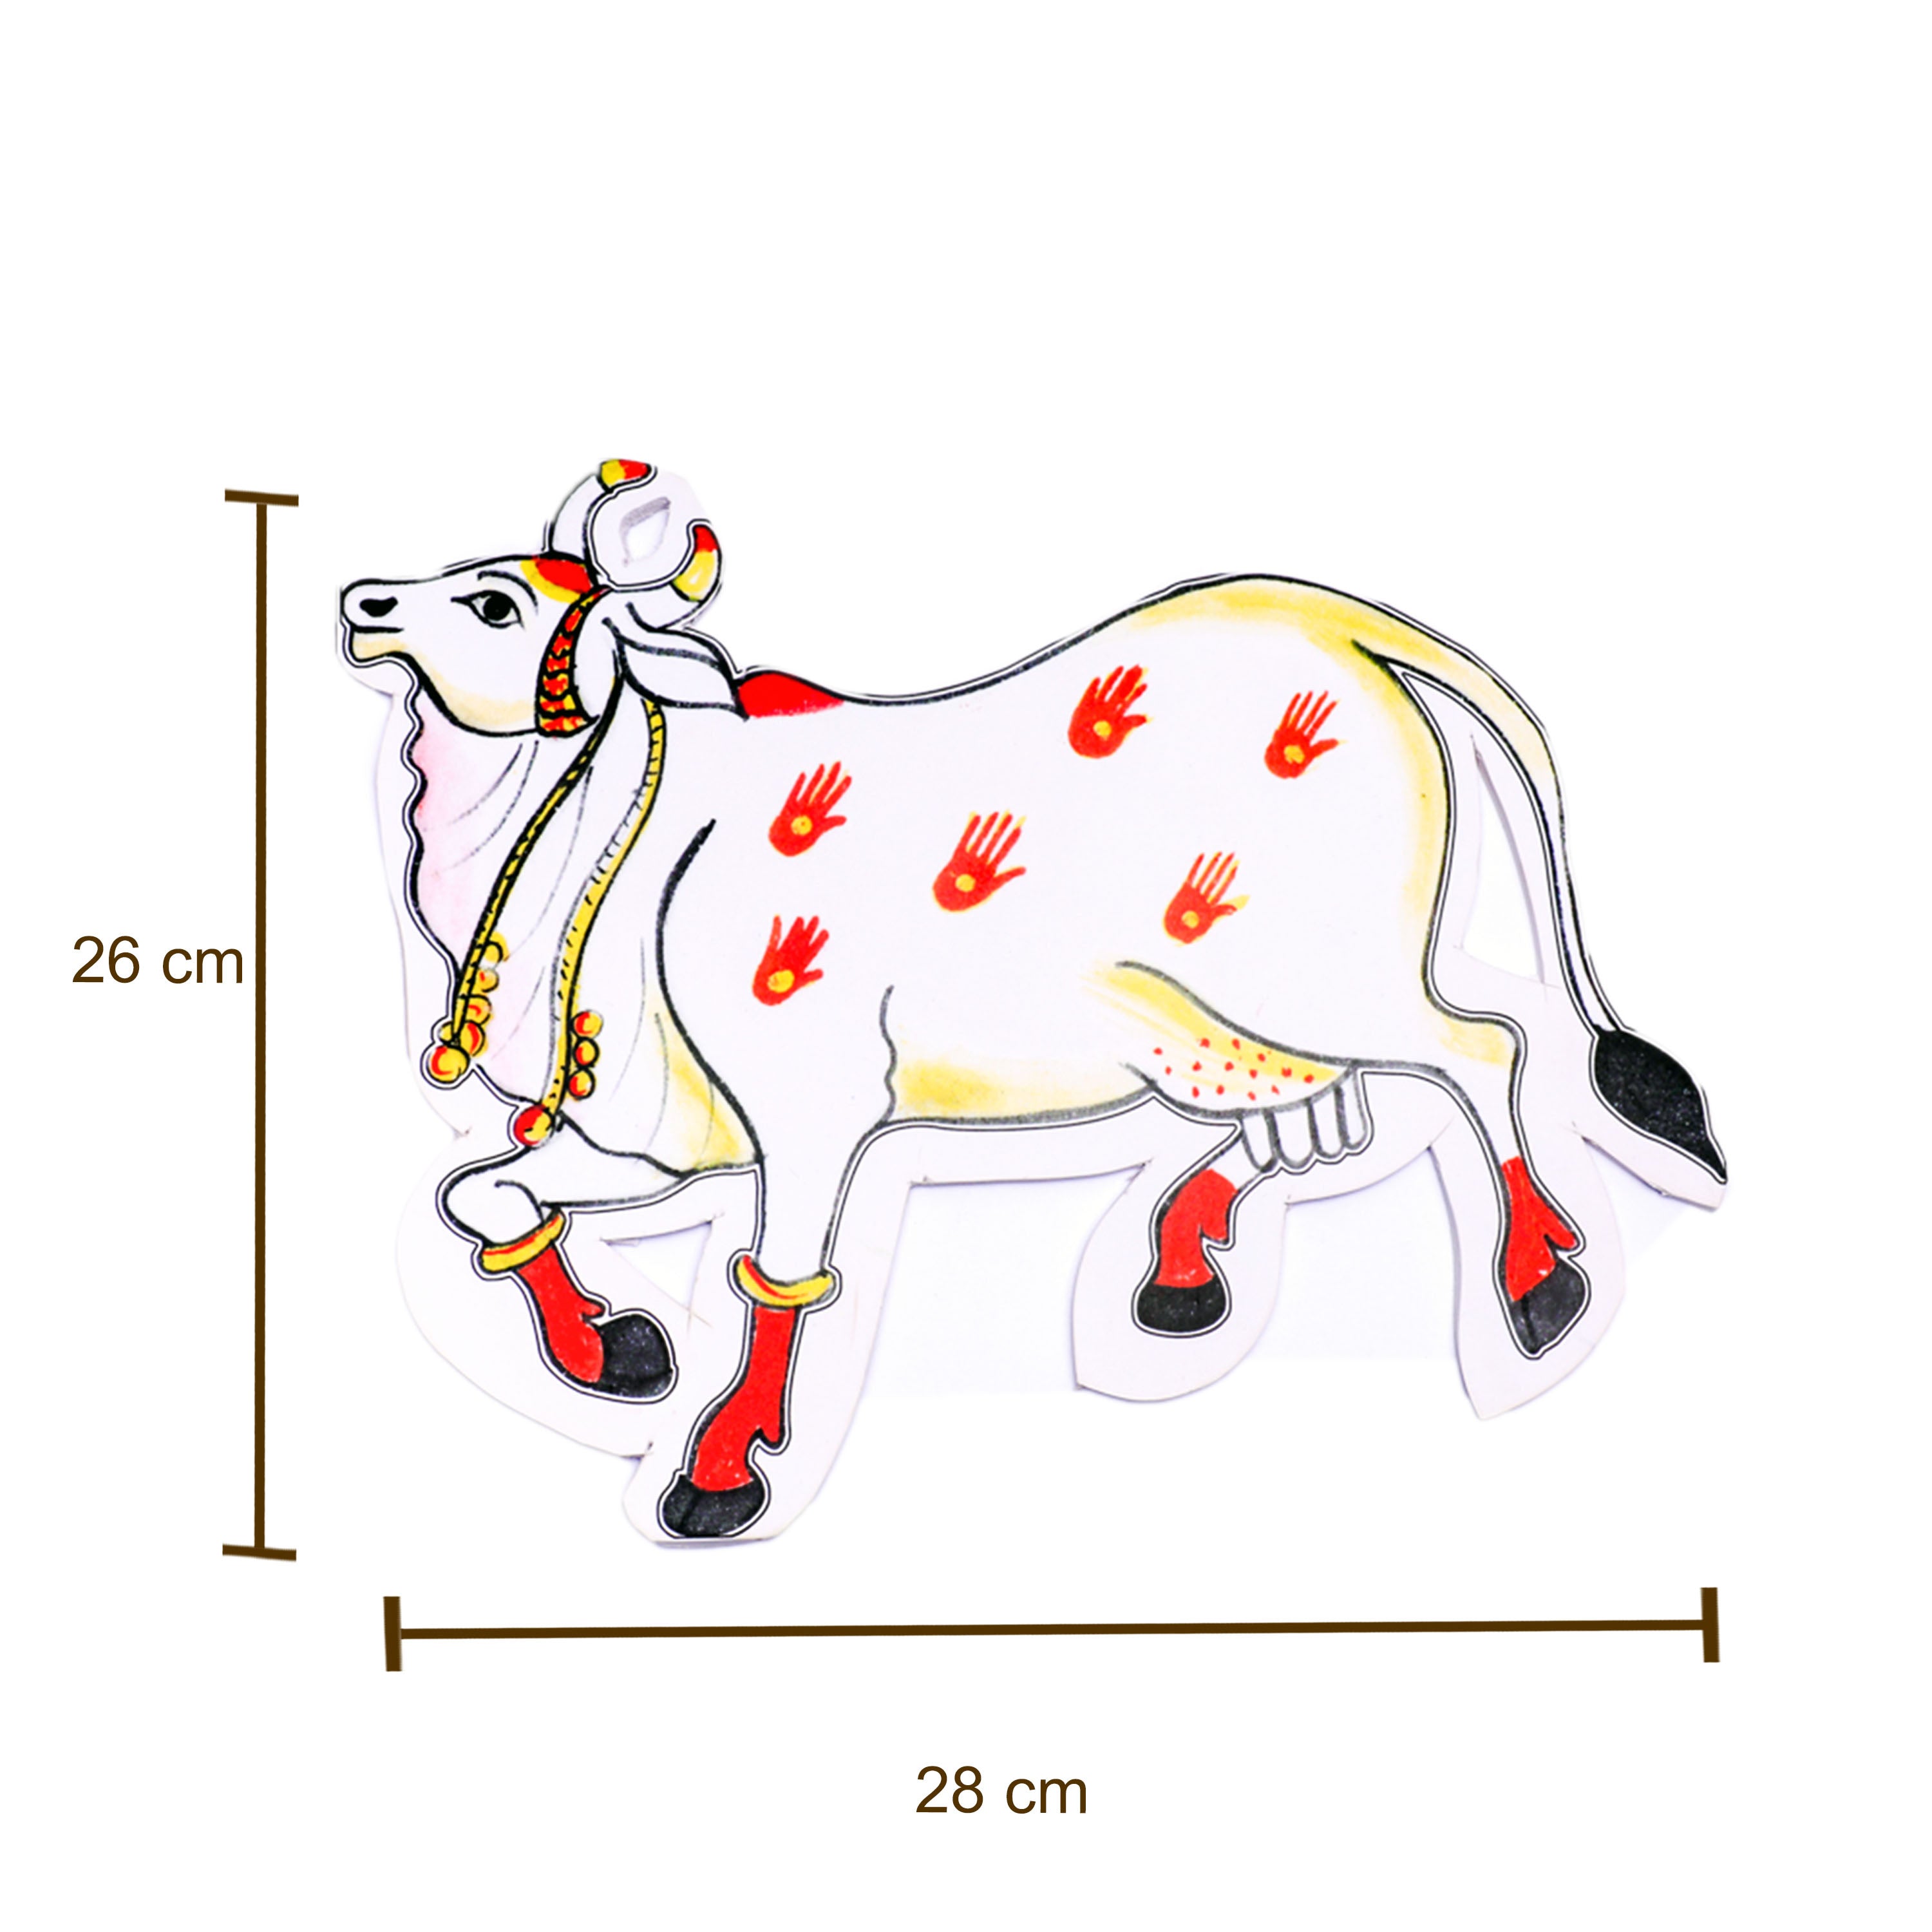 Big size Kamdhenu cow cutouts for background decor